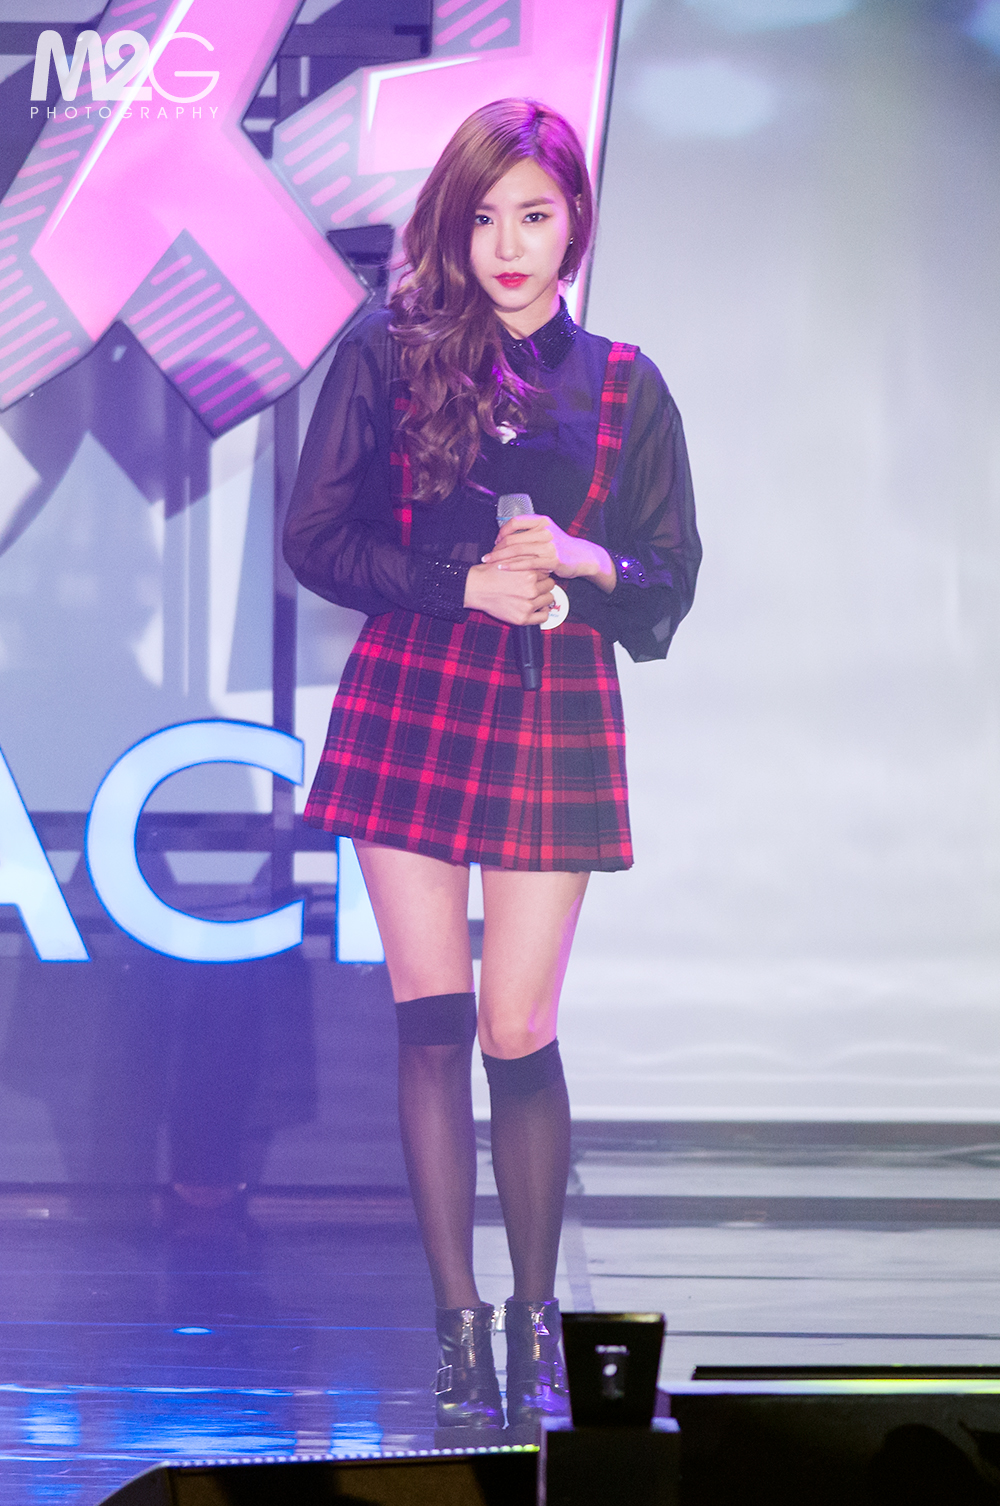 [PIC][11-11-2014]TaeTiSeo biểu diễn tại "Passion Concert 2014" ở Seoul Jamsil Gymnasium vào tối nay - Page 5 250B19445471CC92200003